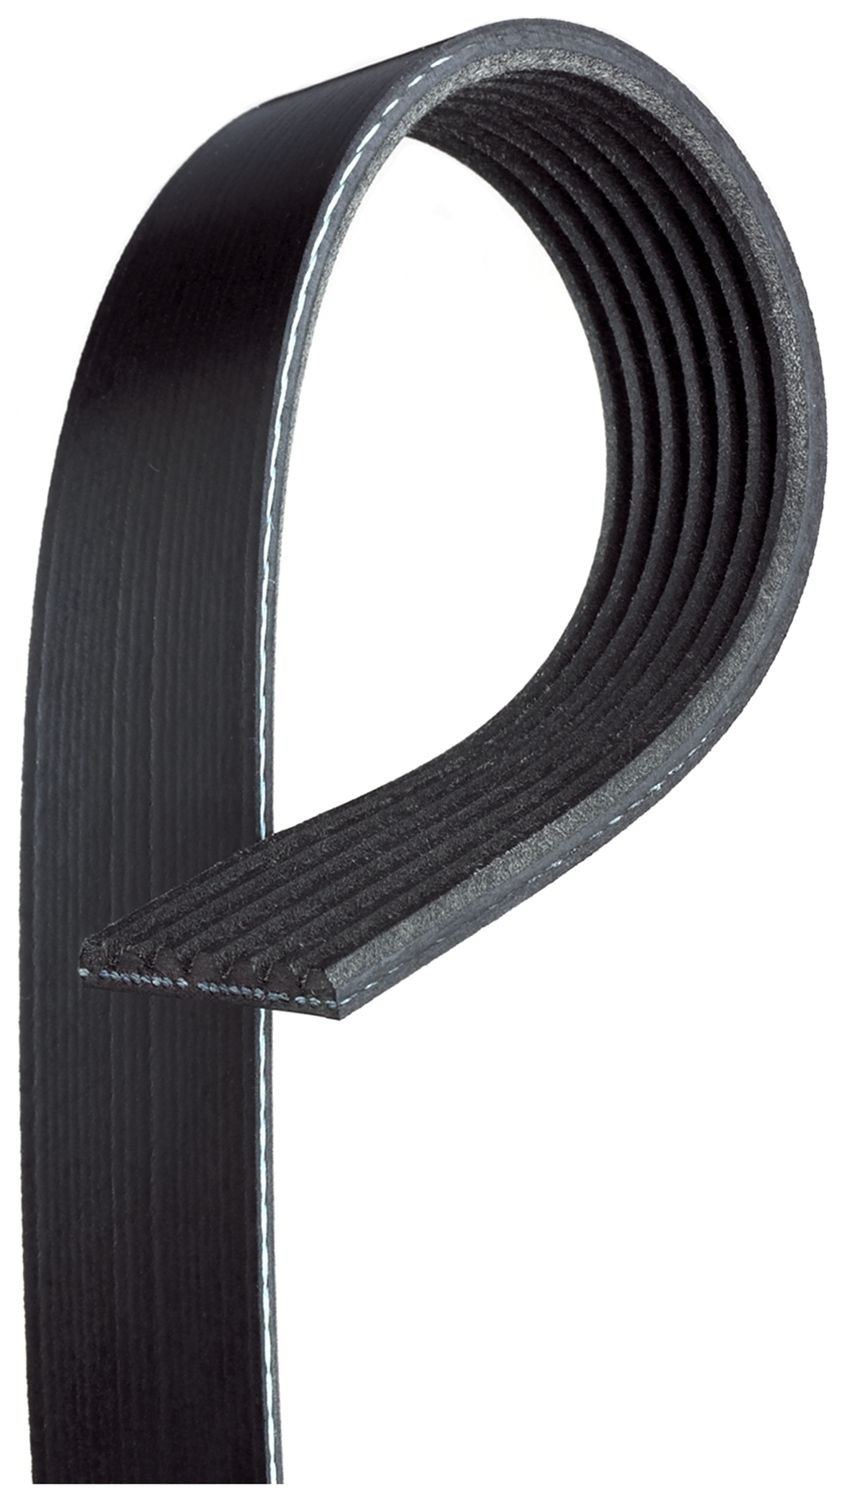 GATES 7PK1153 Serpentine belt 1153mm, 7, G-Force™ C12™ CVT Belt